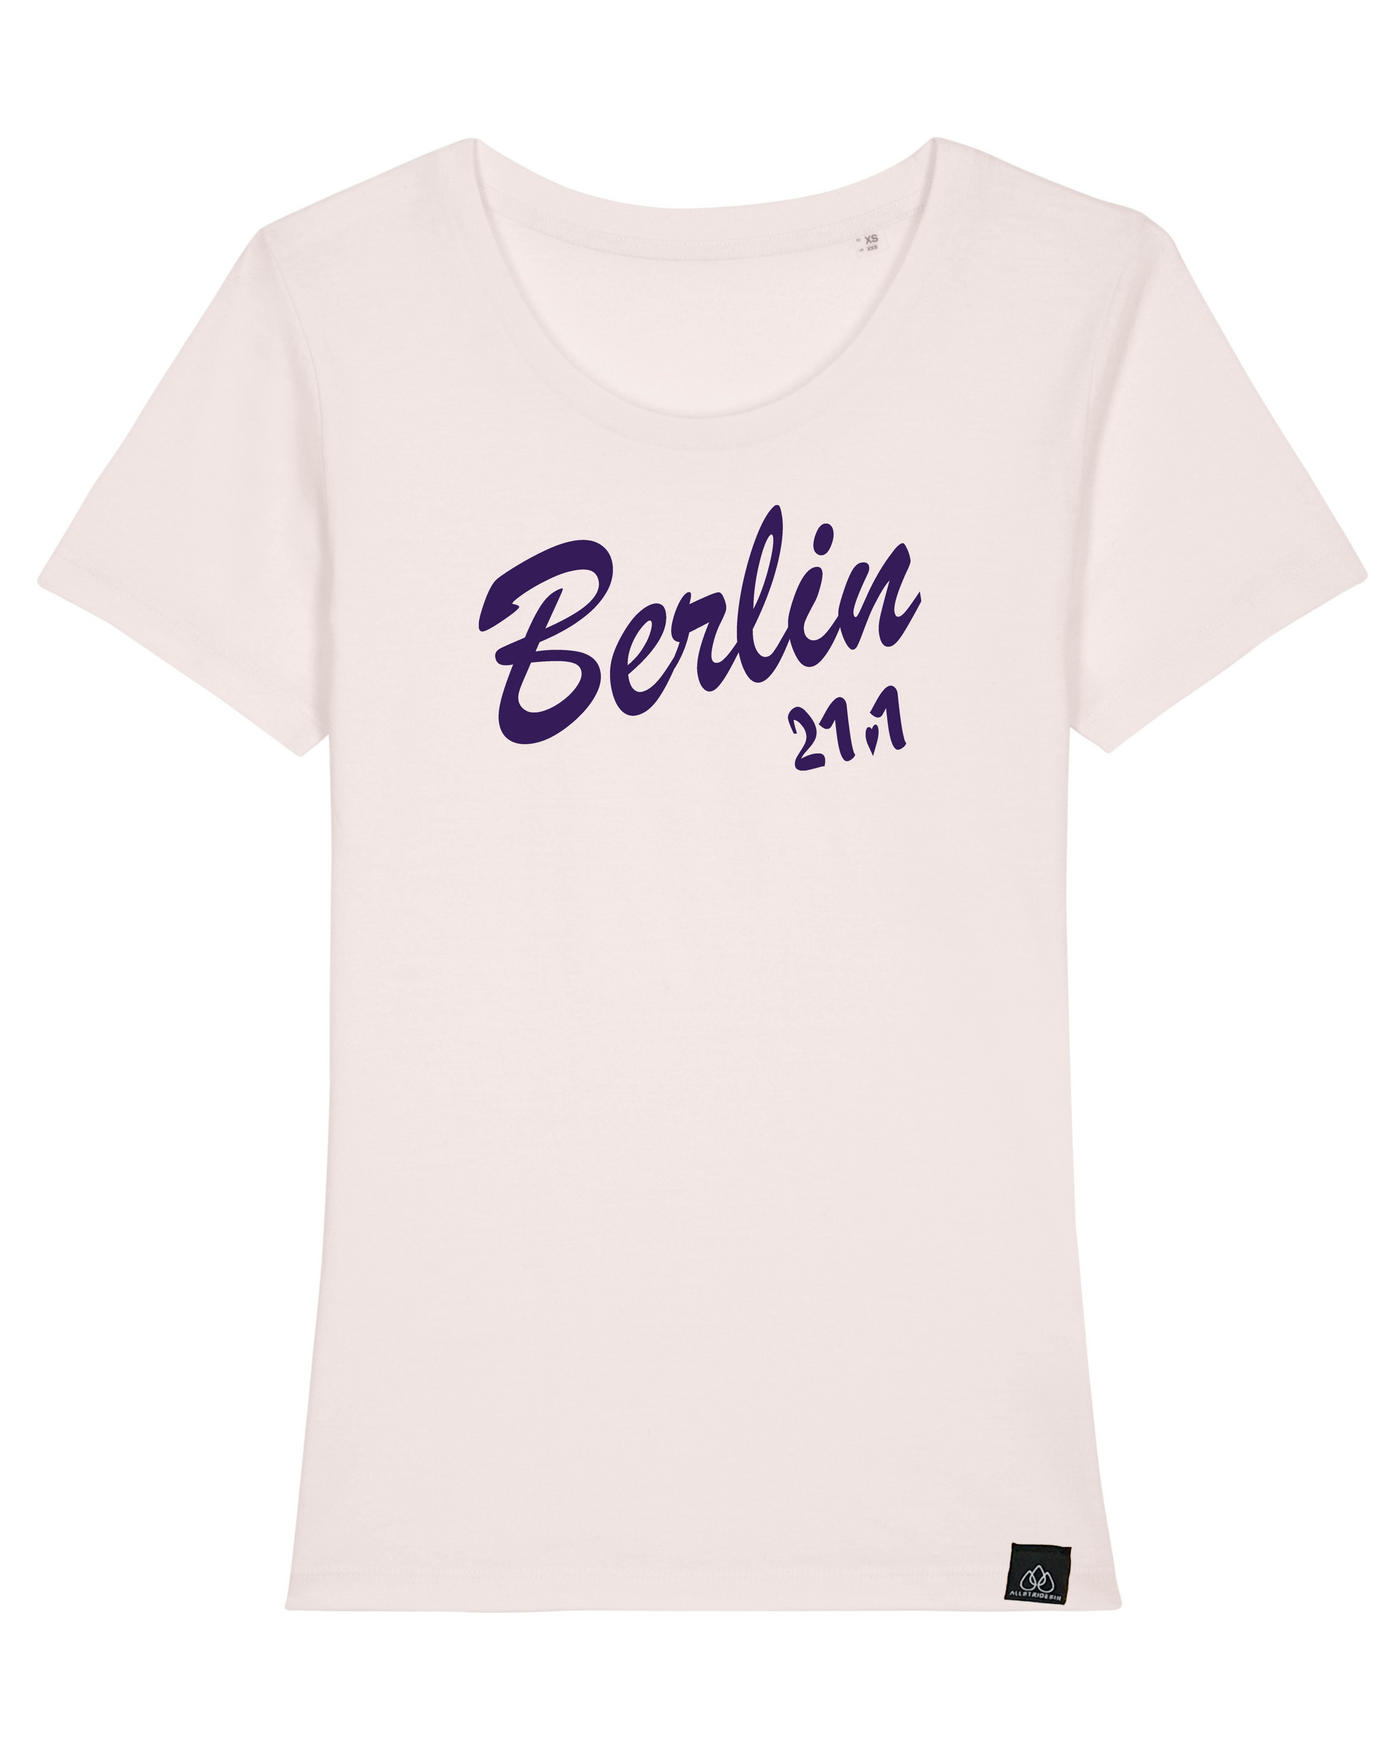 BERLIN 21.1 - ICONIC LADY T-SHIRT | ALLSTRIDESIN®